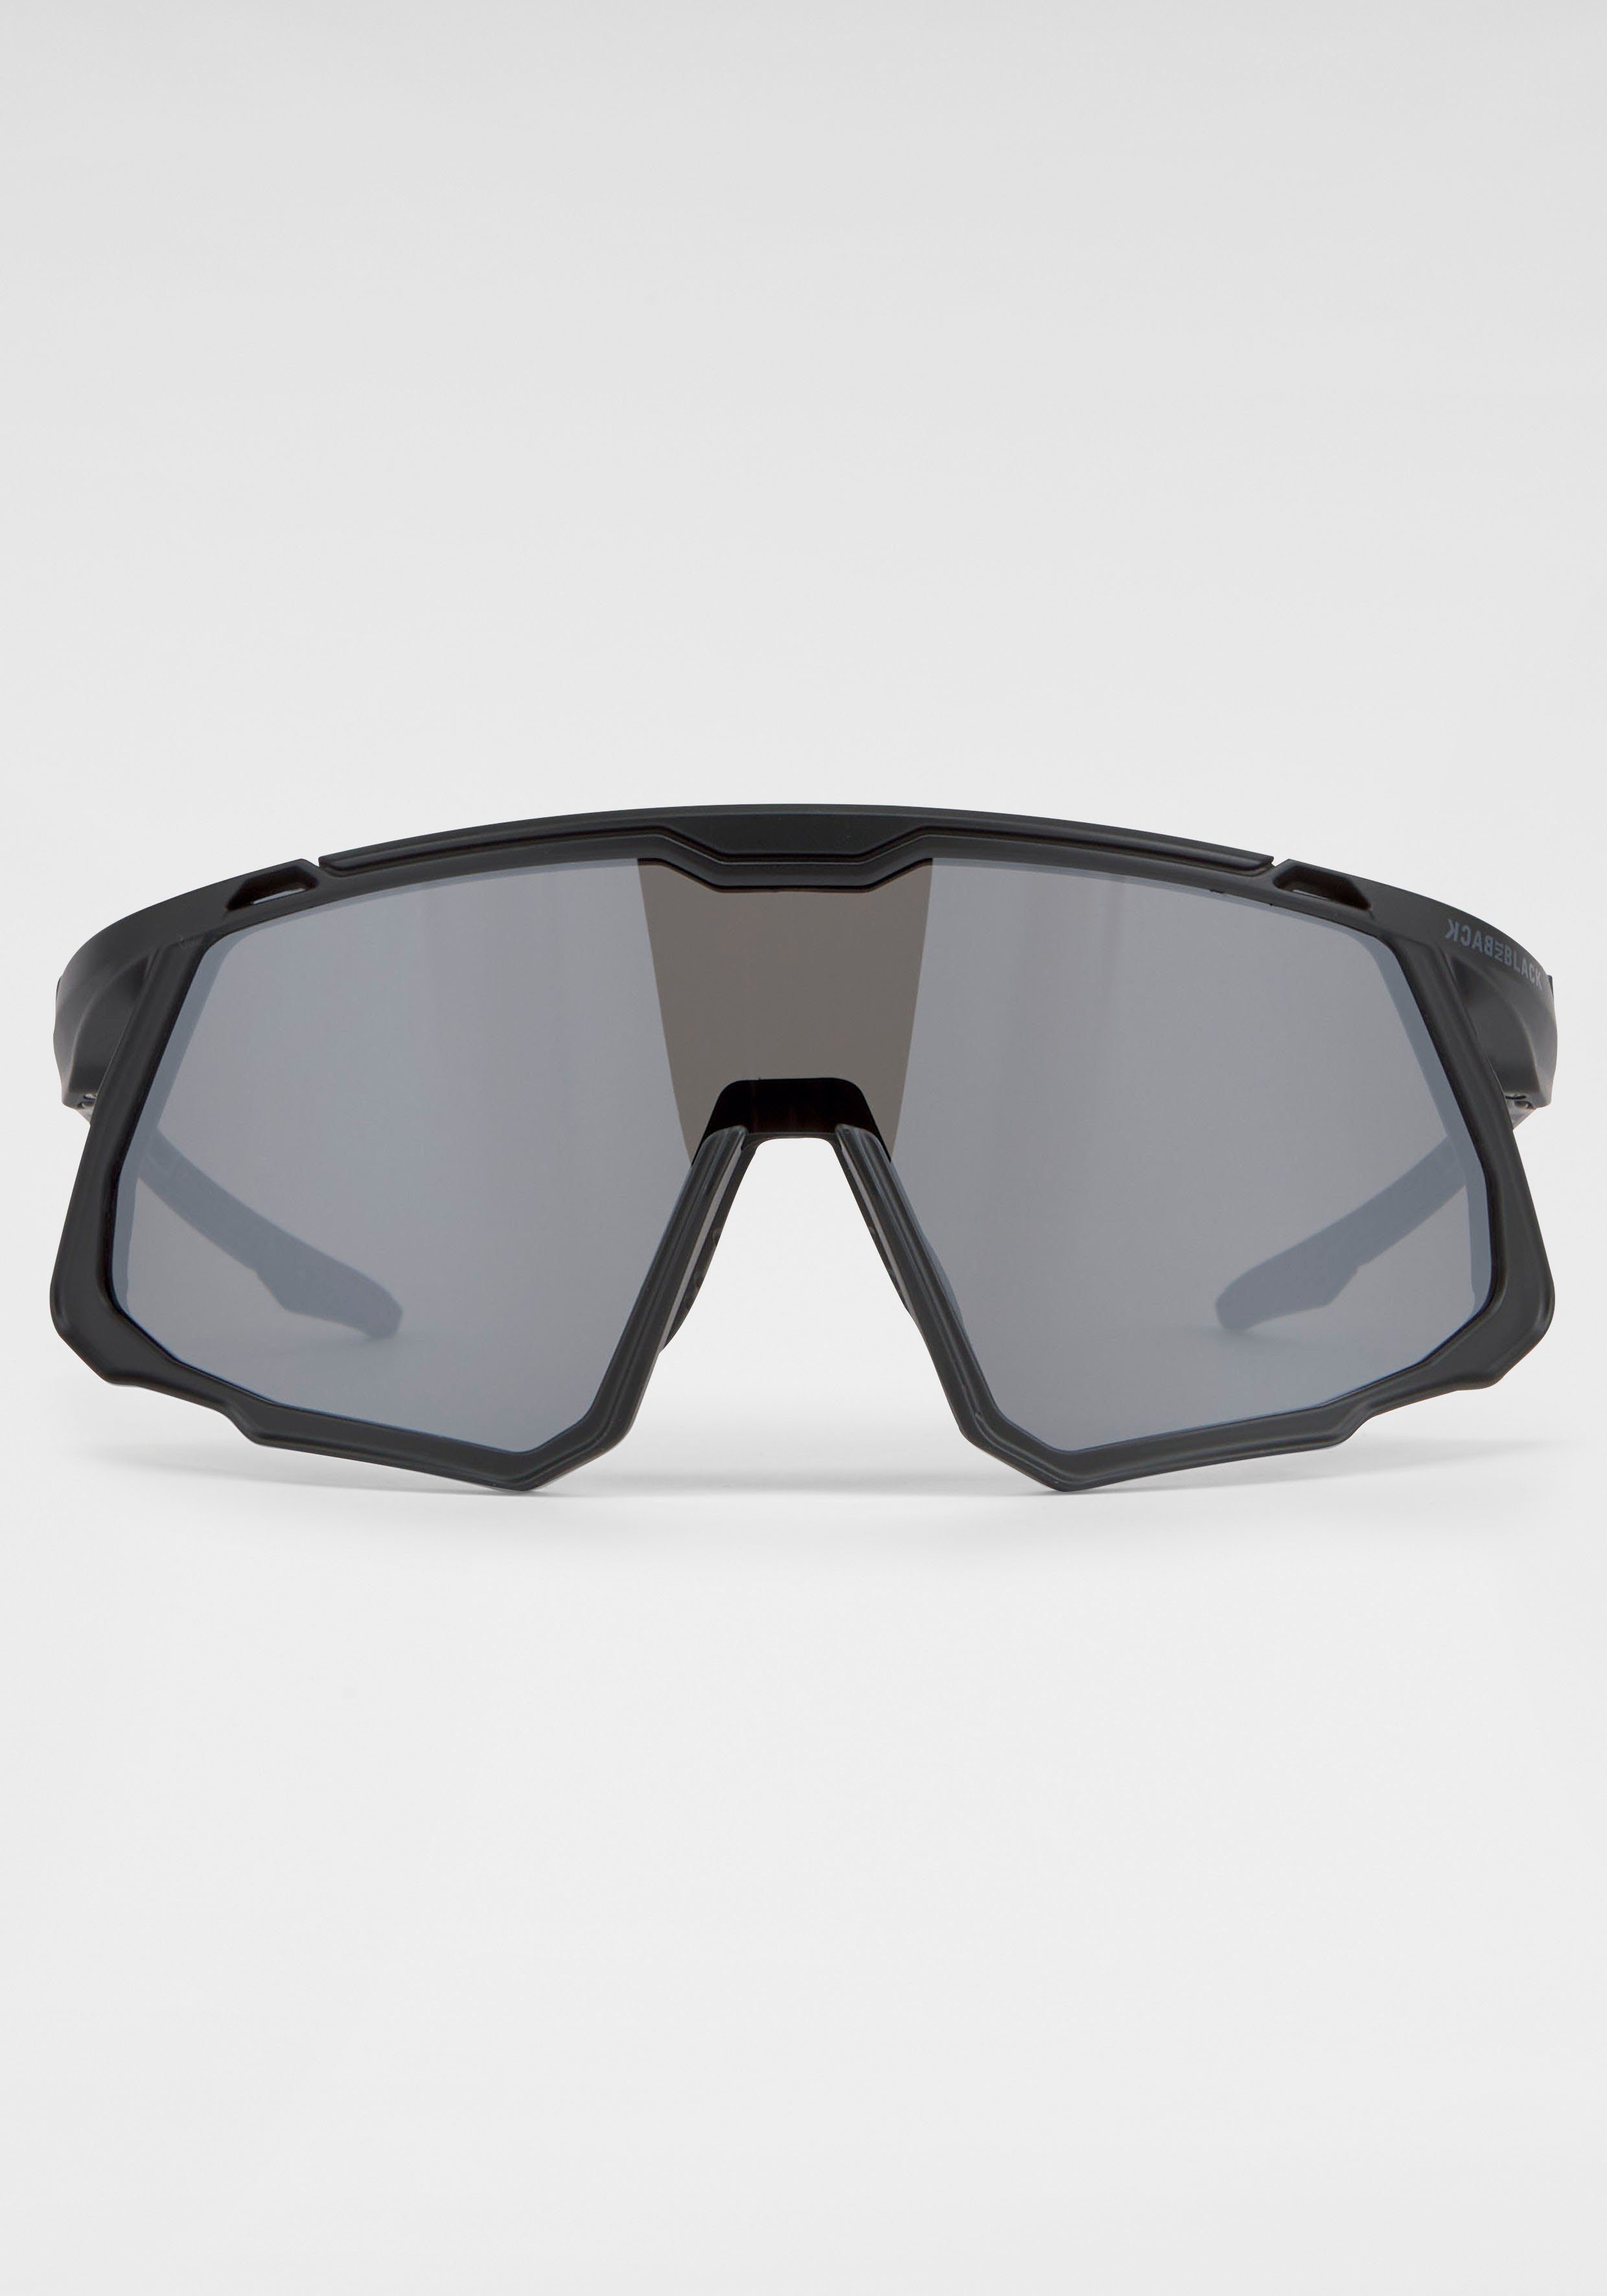 BACK IN BLACK Eyewear Sonnenbrille gebogene schwarz Form